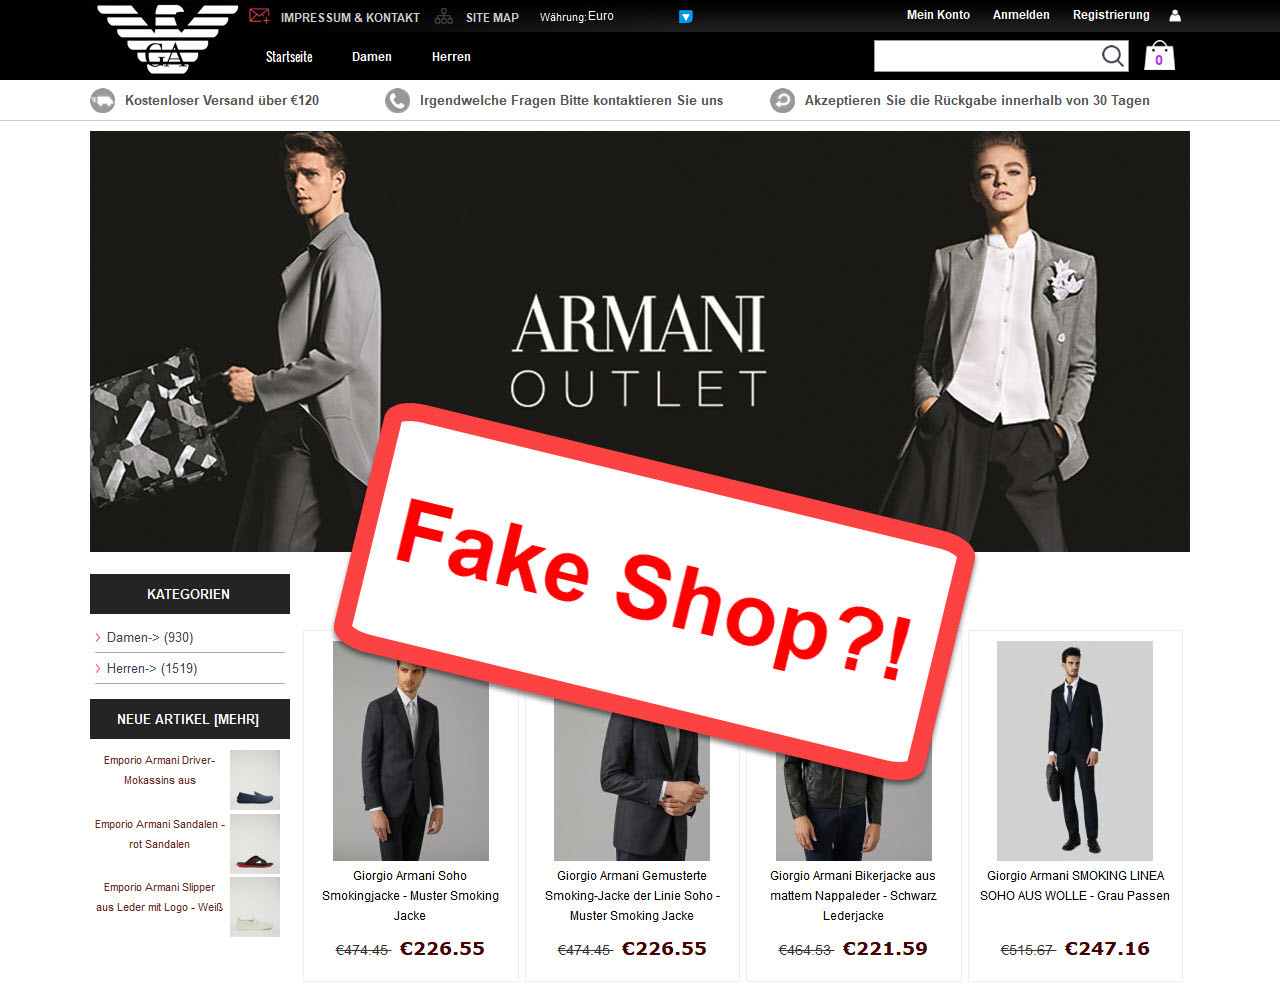 Dubious Armani Fake Shop 